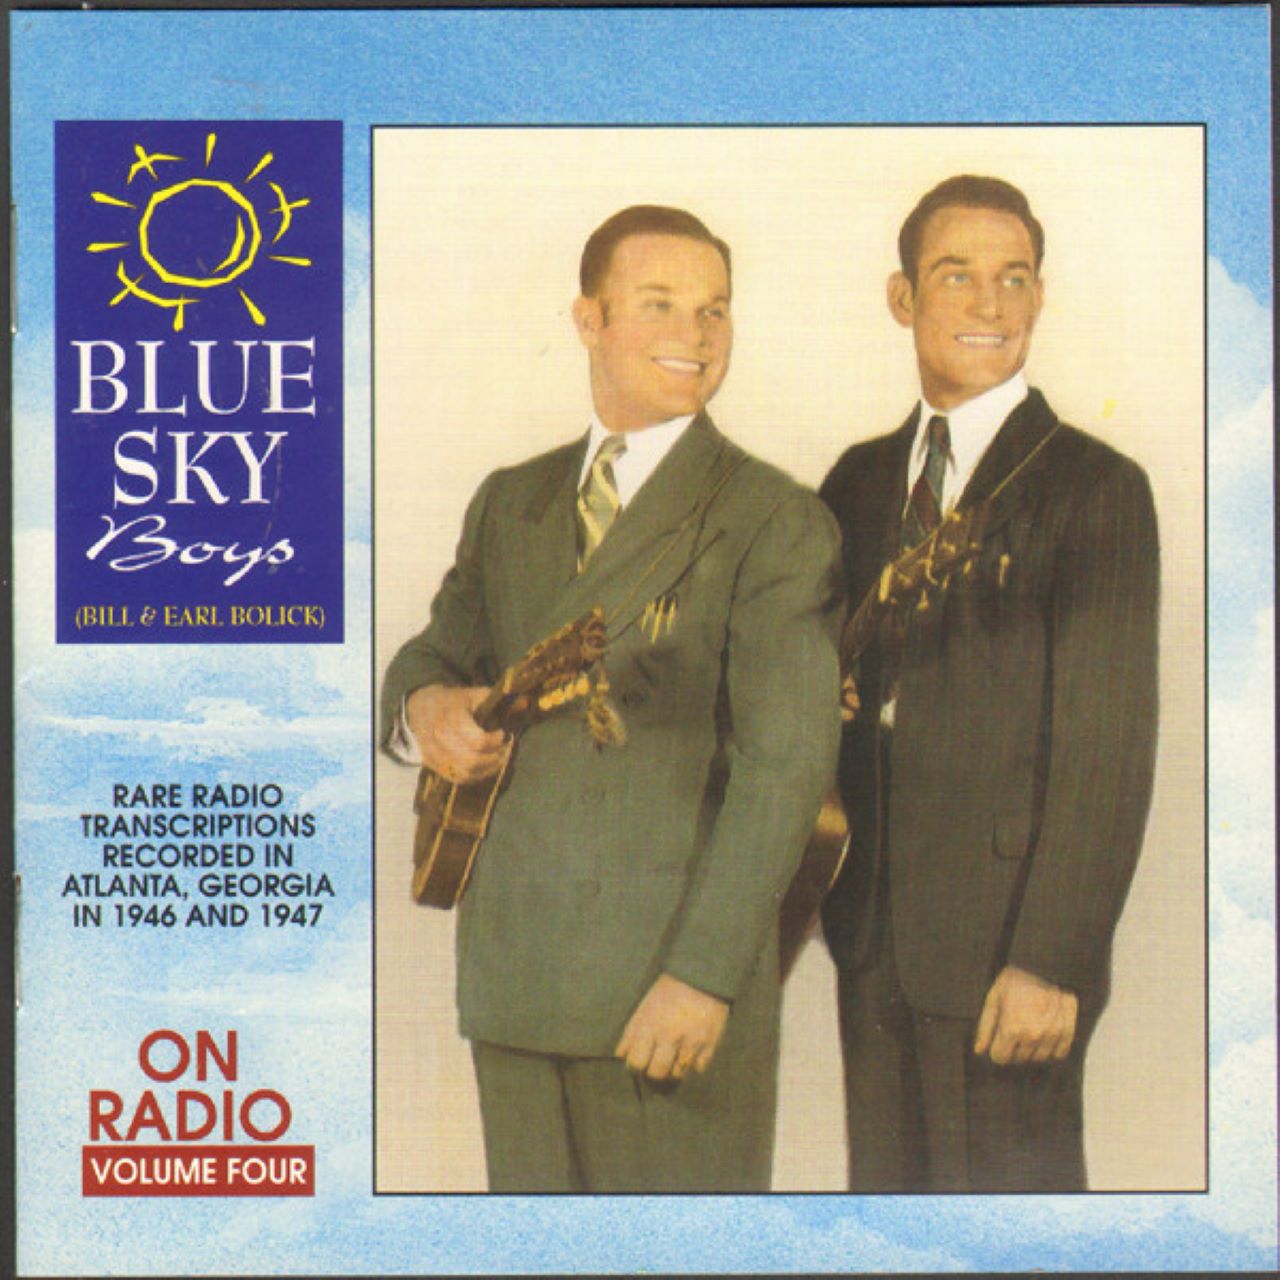 Blue Sky Boys - On Radio - Volume Four cover album